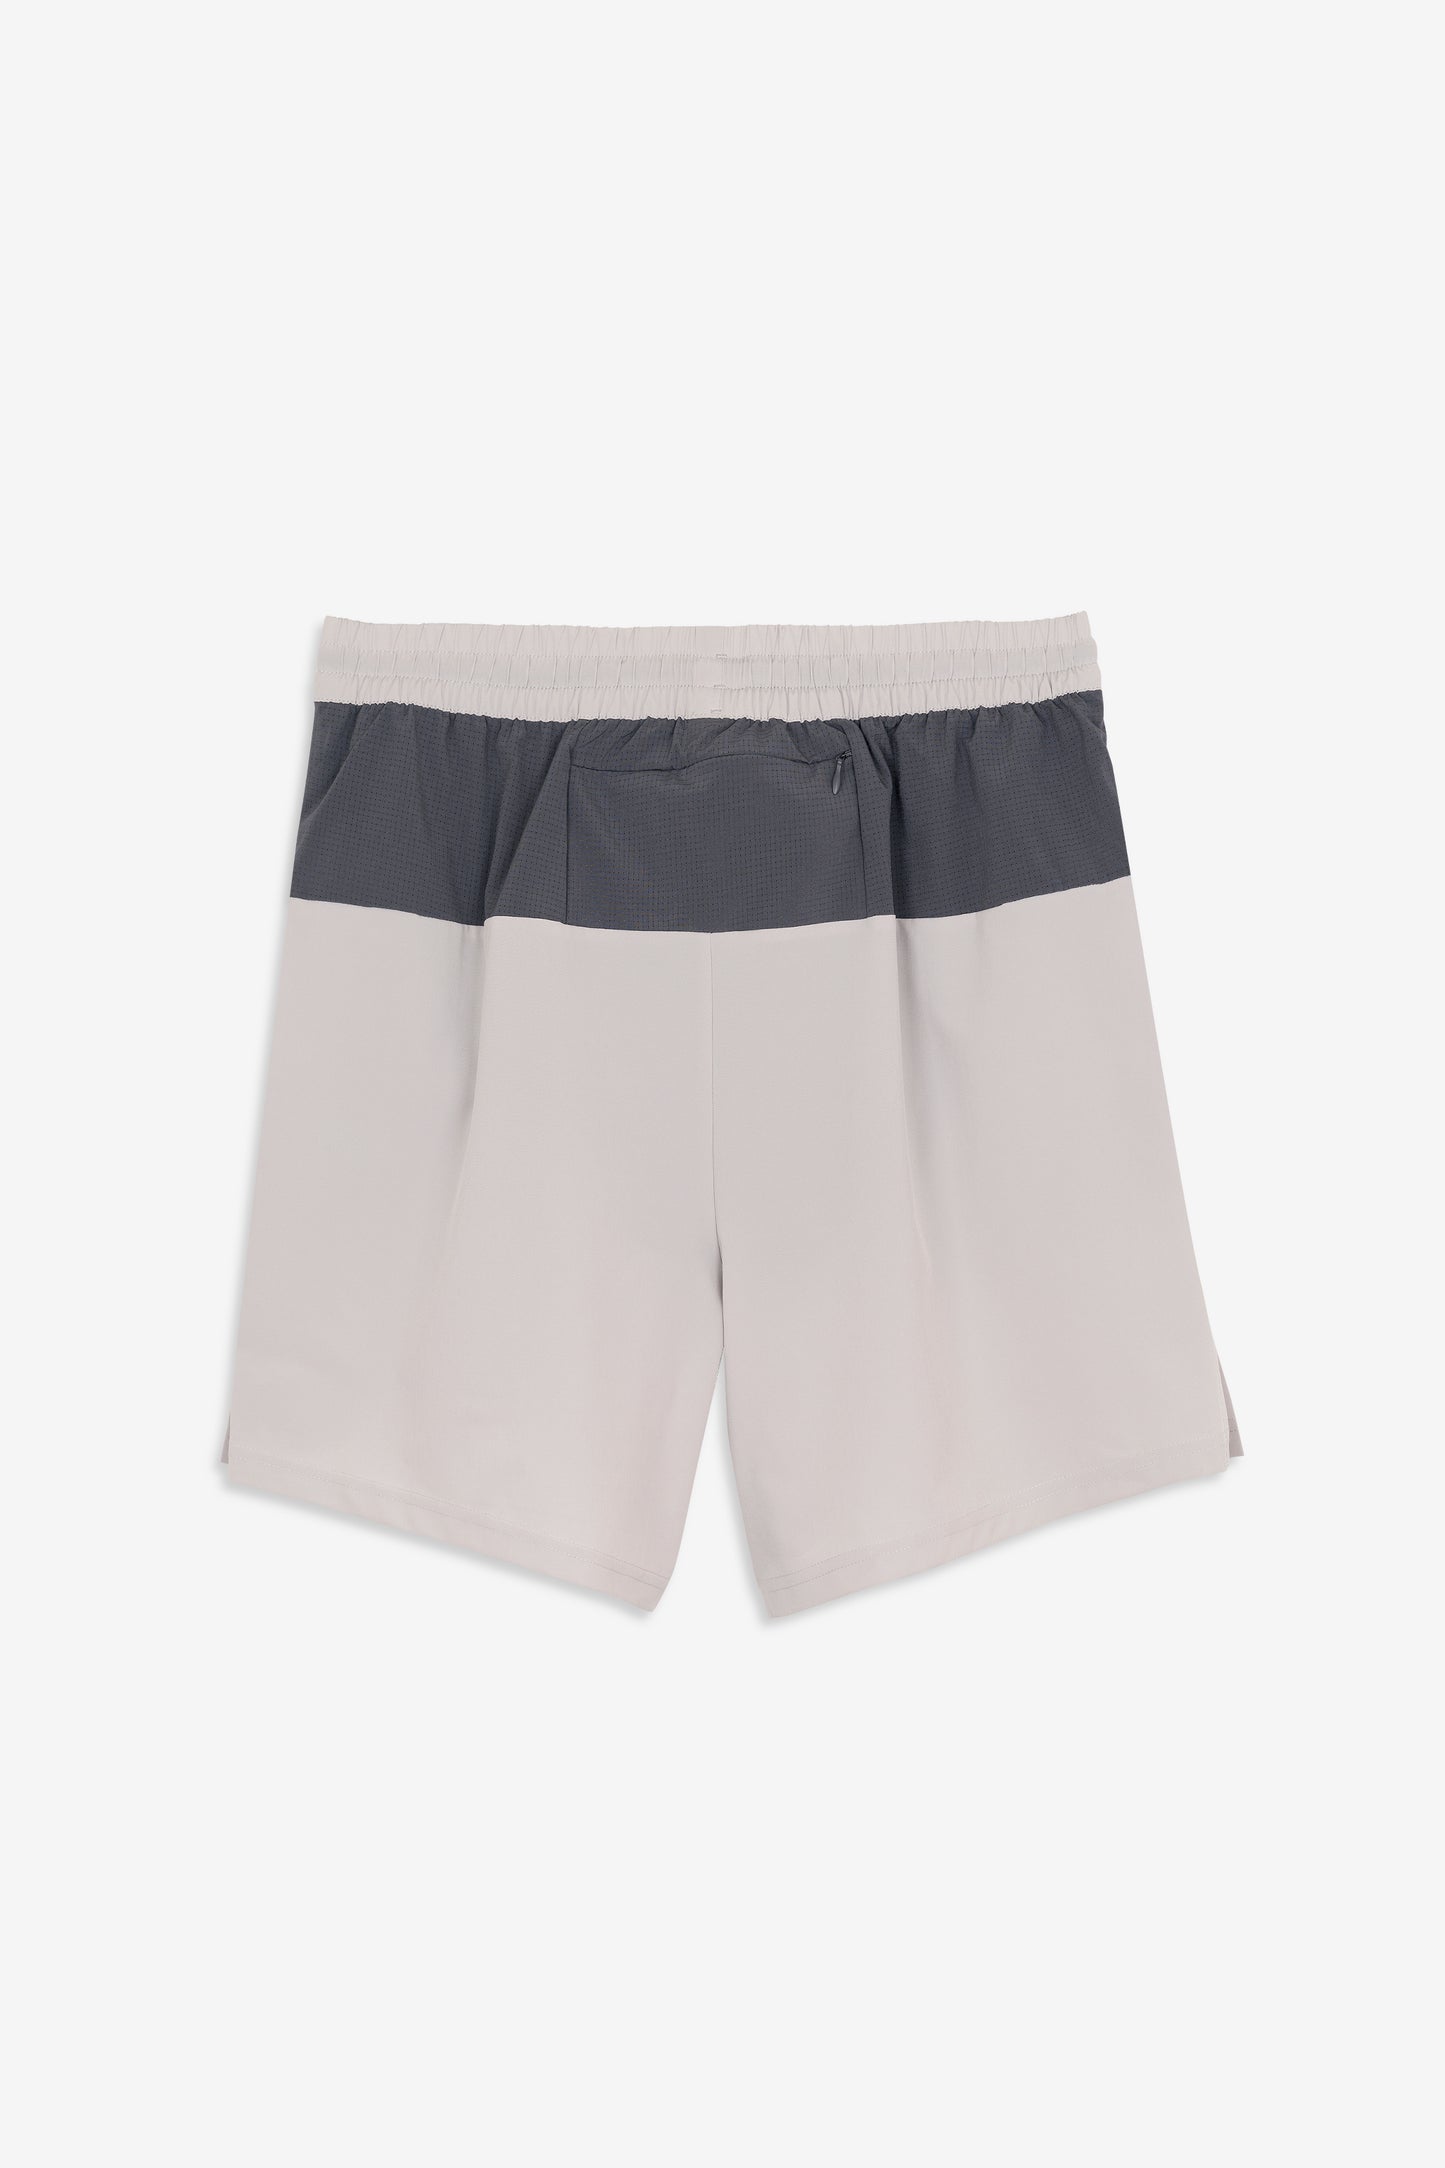 MEN Shorts PRO White/Grey